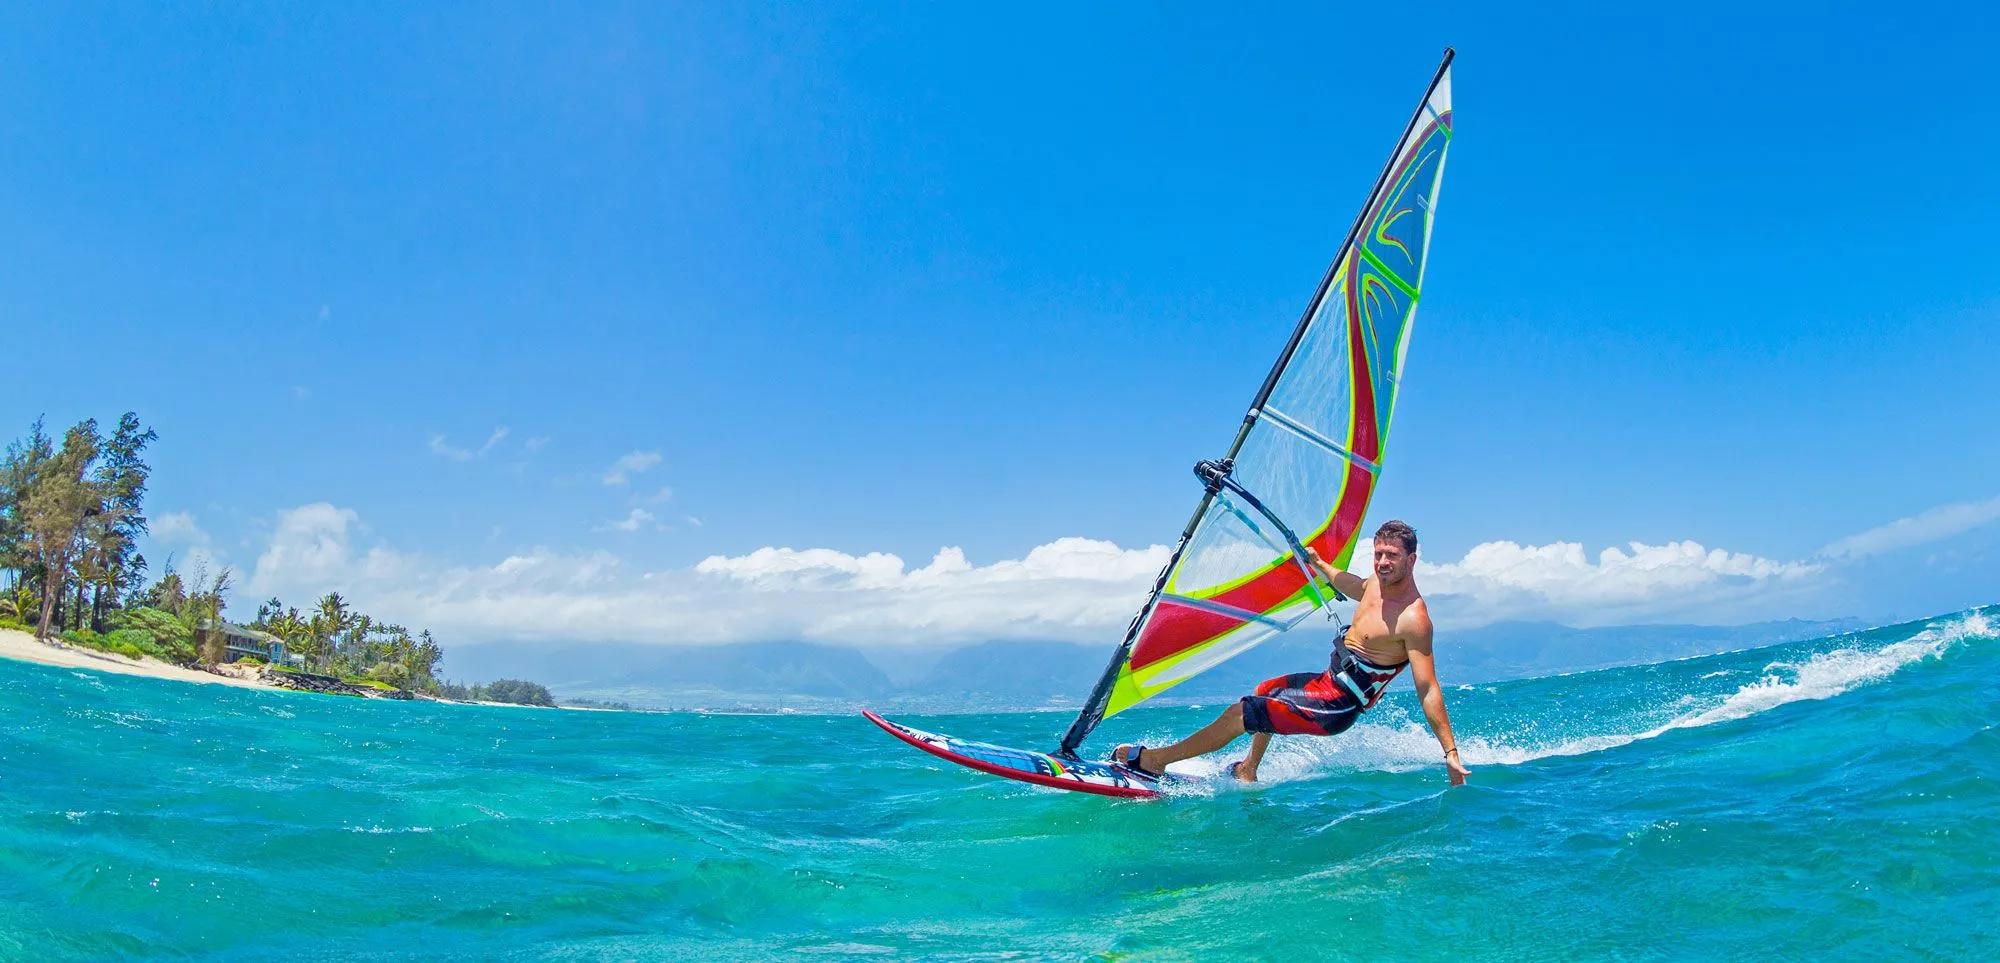 Club de Windsurf Burriana in Spain, Europe | Yachting,Kayaking & Canoeing,Windsurfing - Rated 0.9